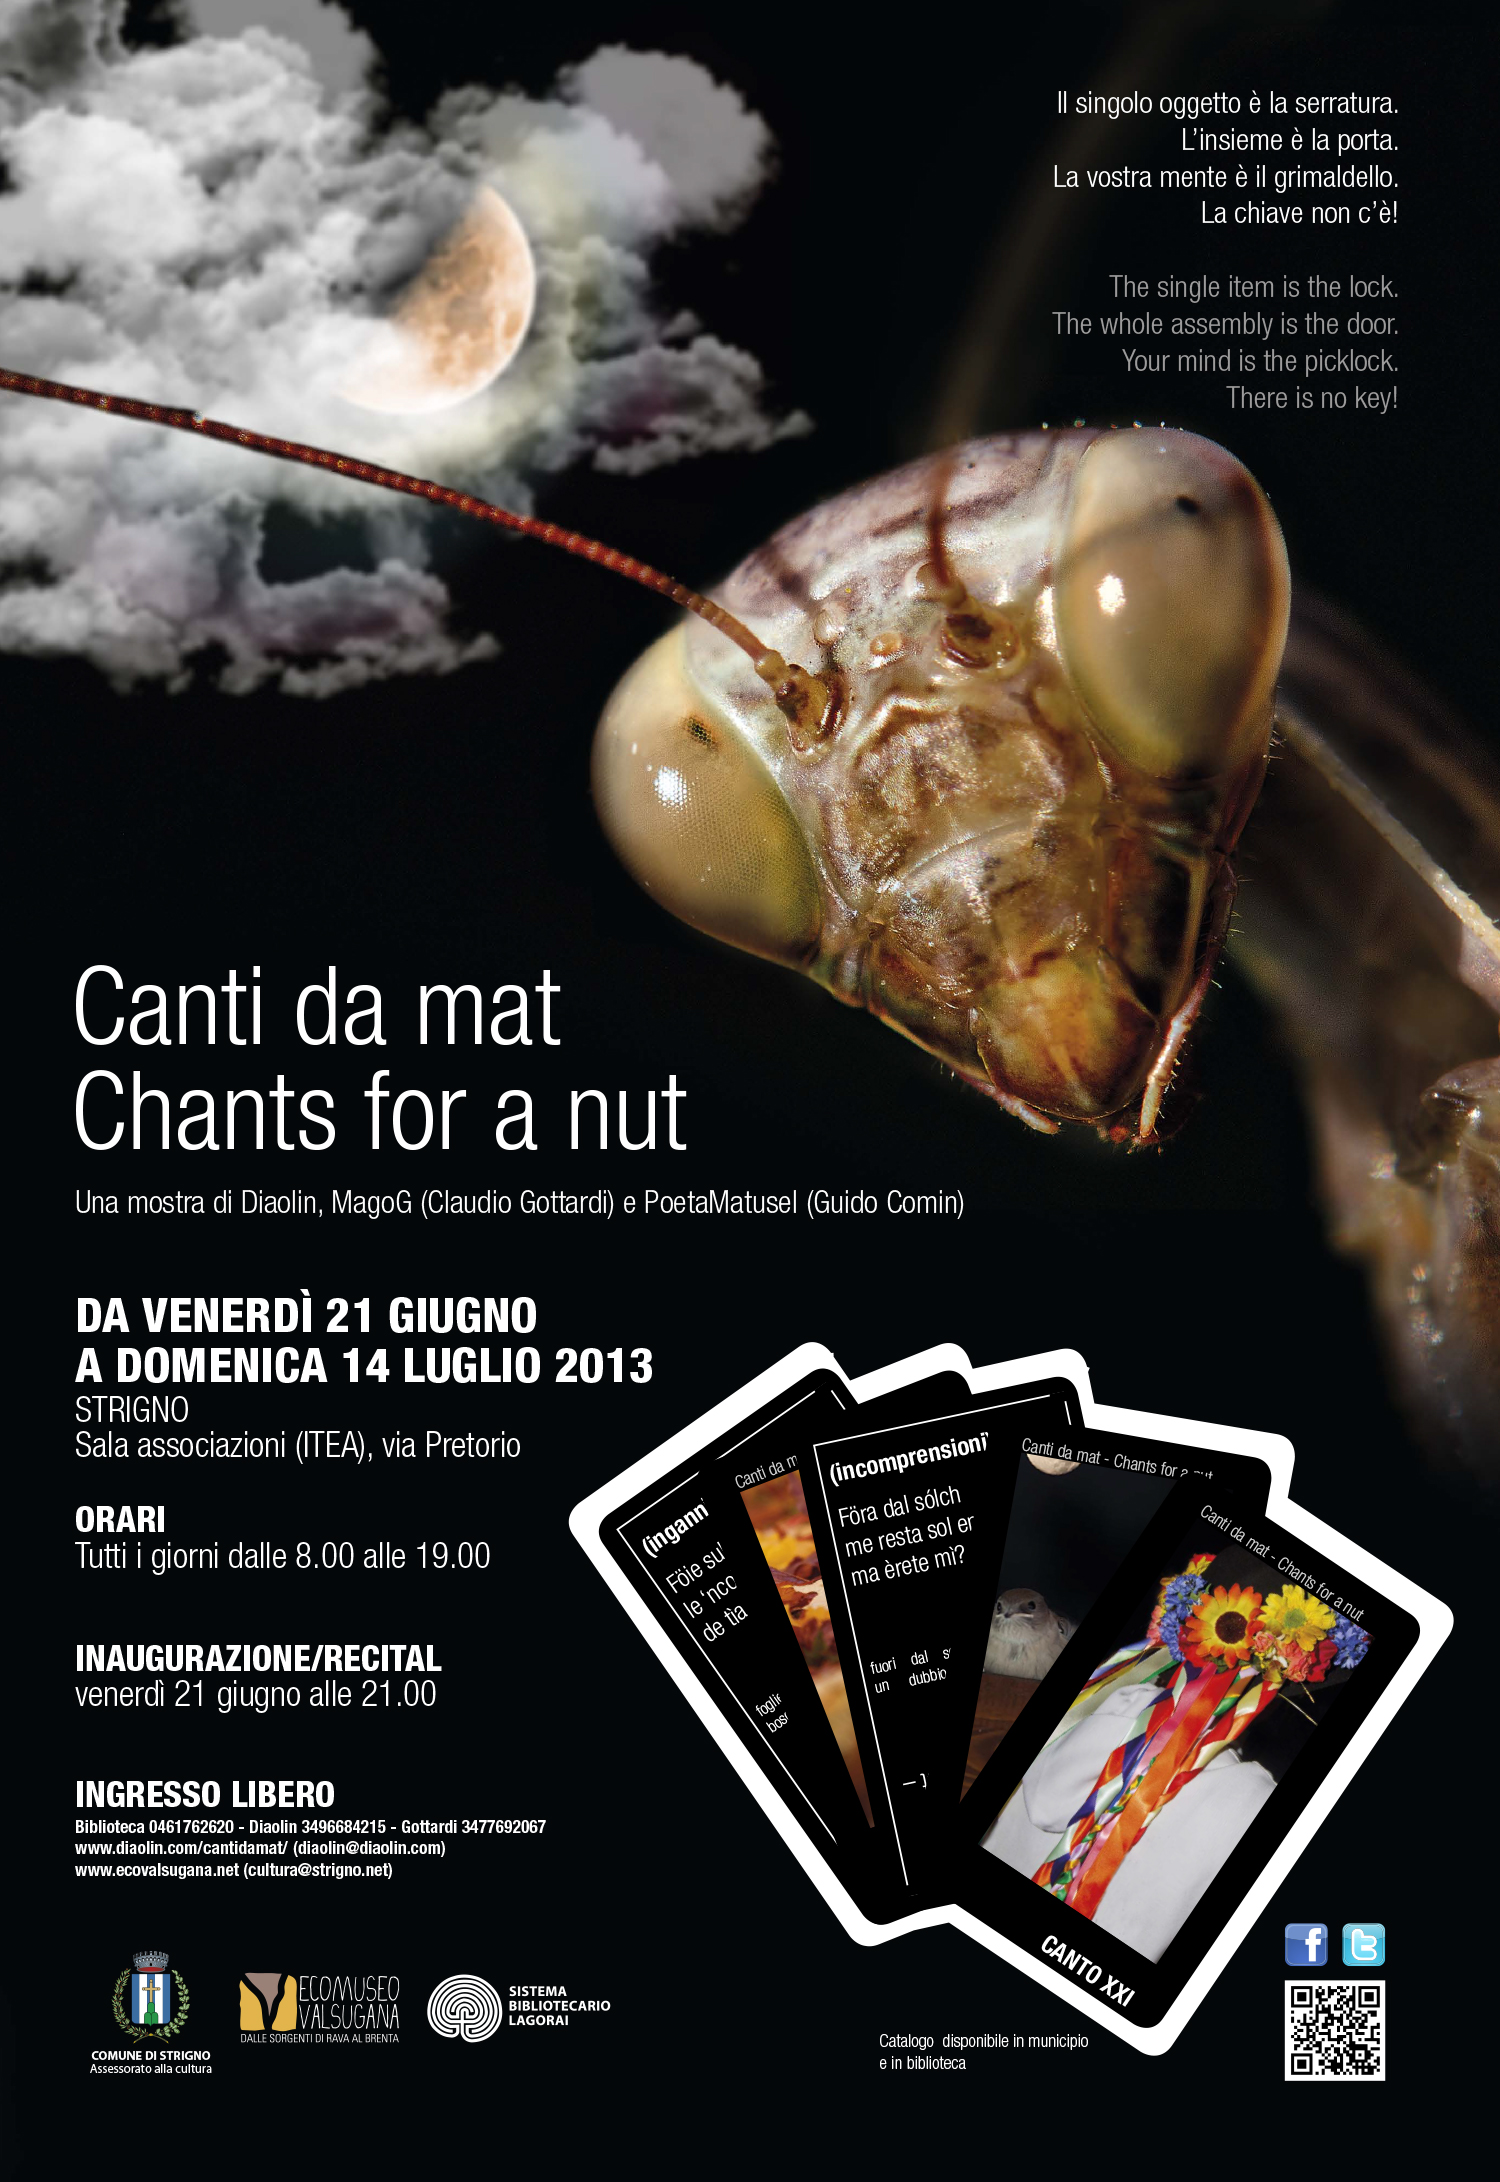 Canti da mat – Chants for a nut